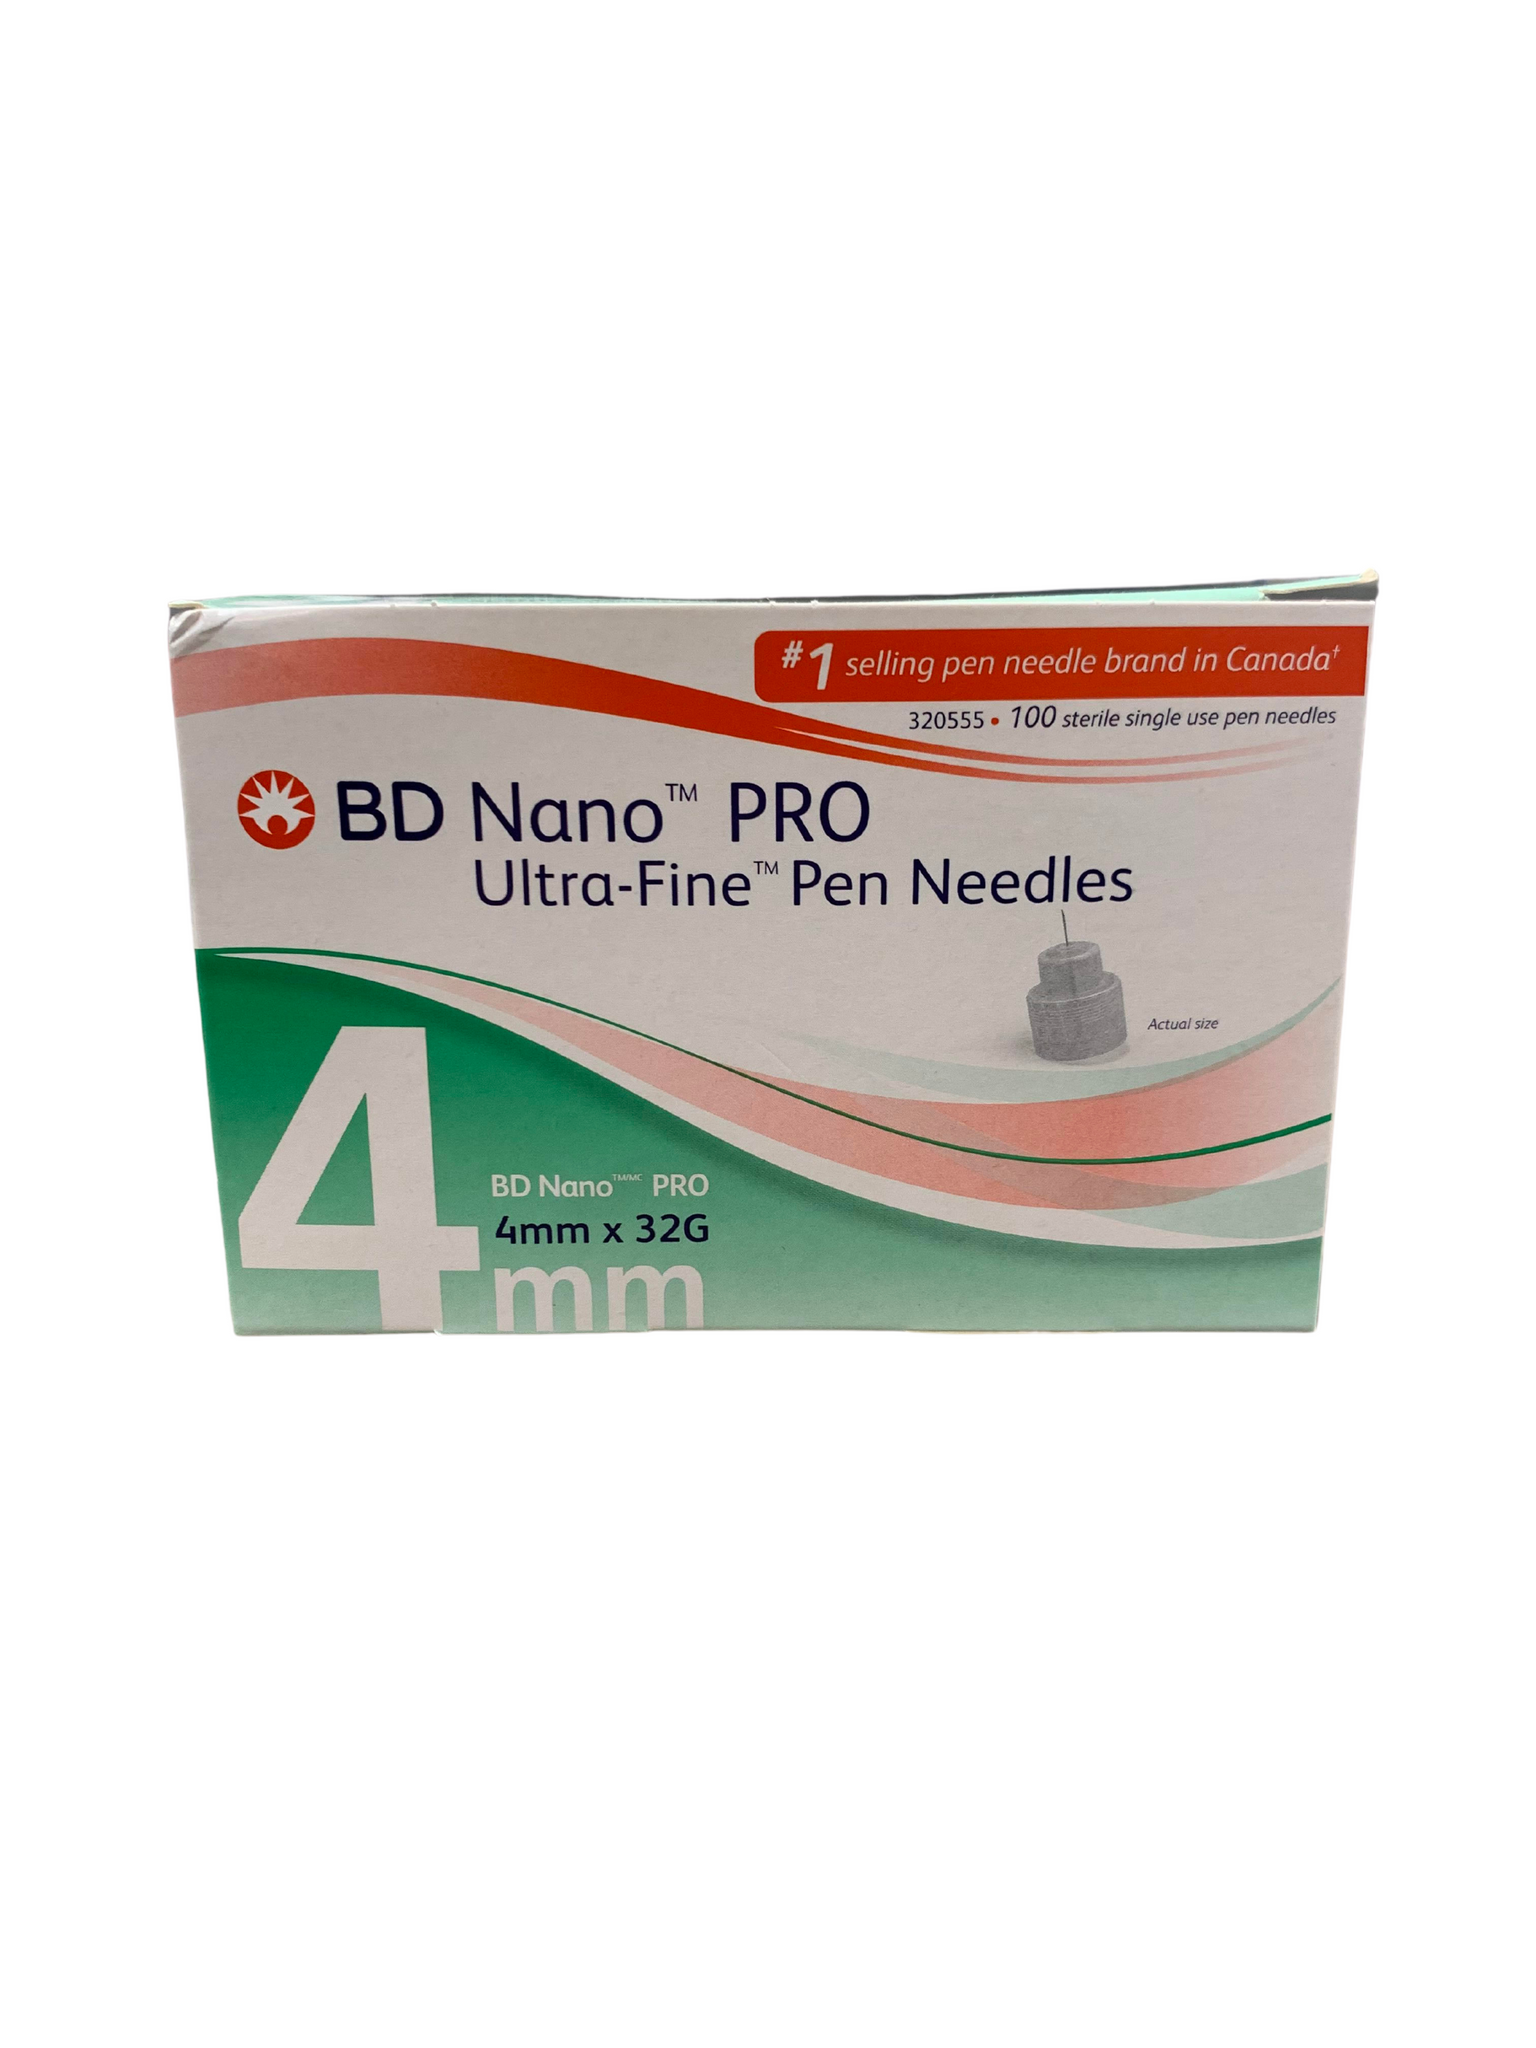 BD Nano PRO Ultra-Fine Pen Needle 4mmx32G 100 Count